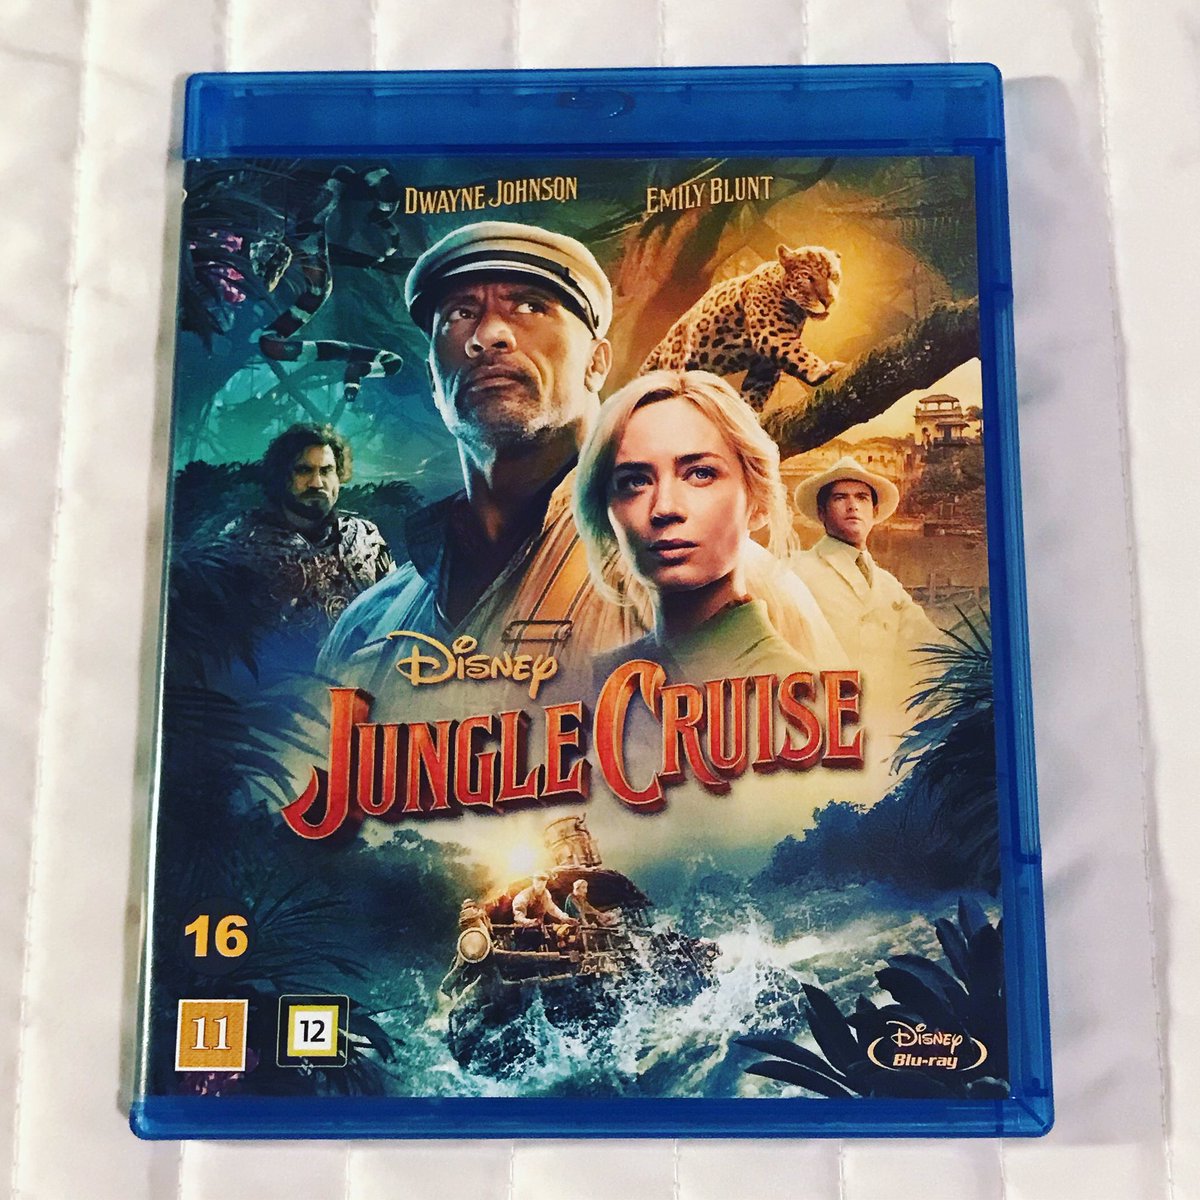 Watching 'Jungle Cruise' (2021) on Blu-ray. Adventure movie starring Dwayne Johnson, Emily Blunt, Édgar Ramírez and Jack Whitehall. 🎥🎞

#JungleCruise #DwayneJohnson #EmilyBlunt #EdgarRamirez #JackWhitehall #Disney #adventuremovie #bluray